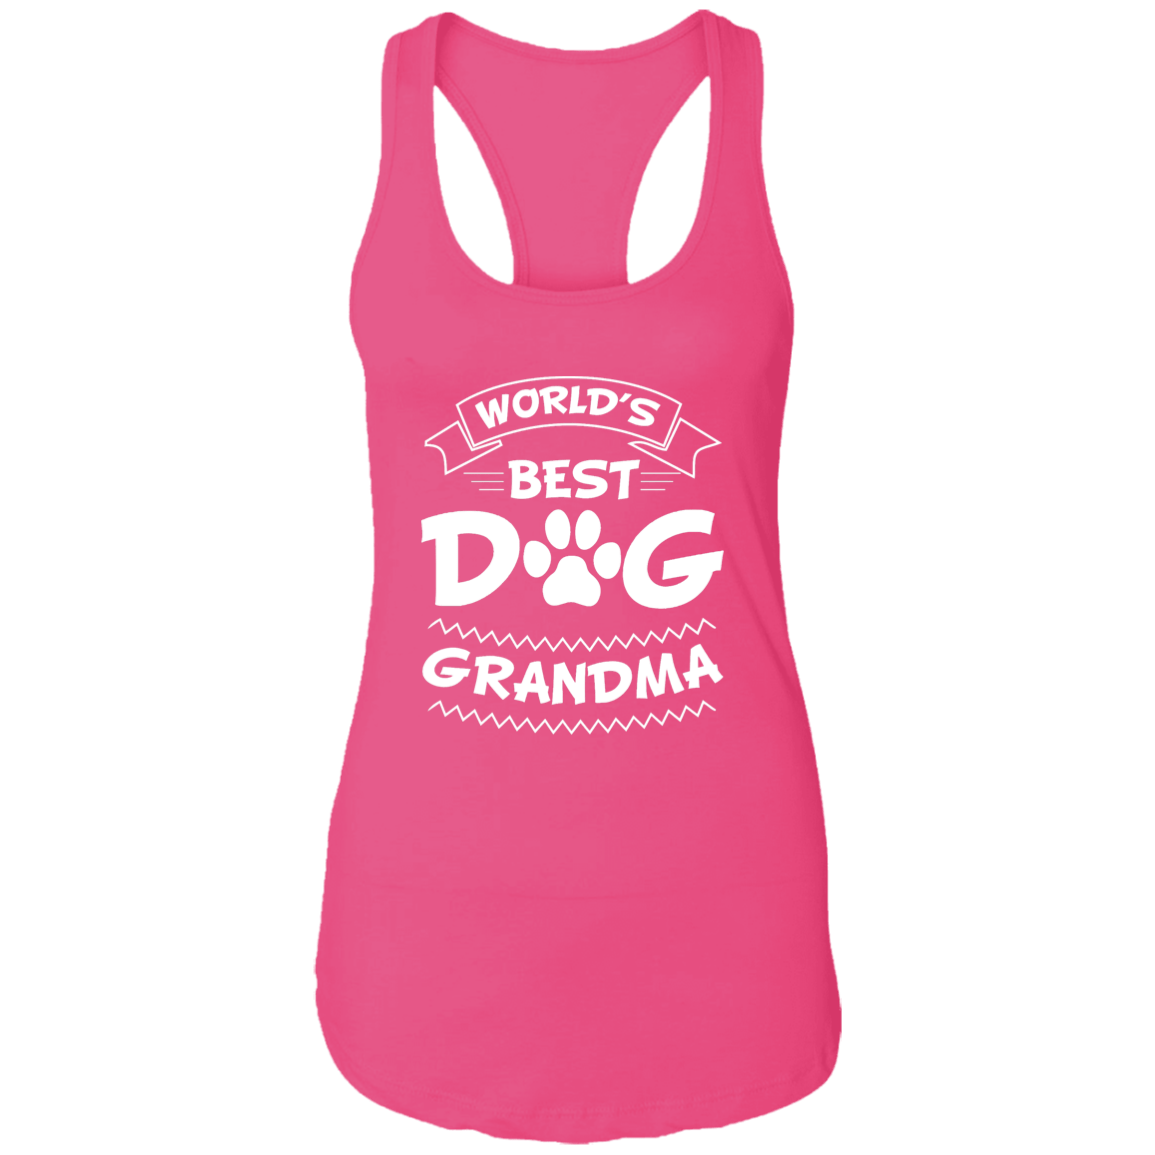 World's Best Dog Grandma - Ladies Racer Back Tank.